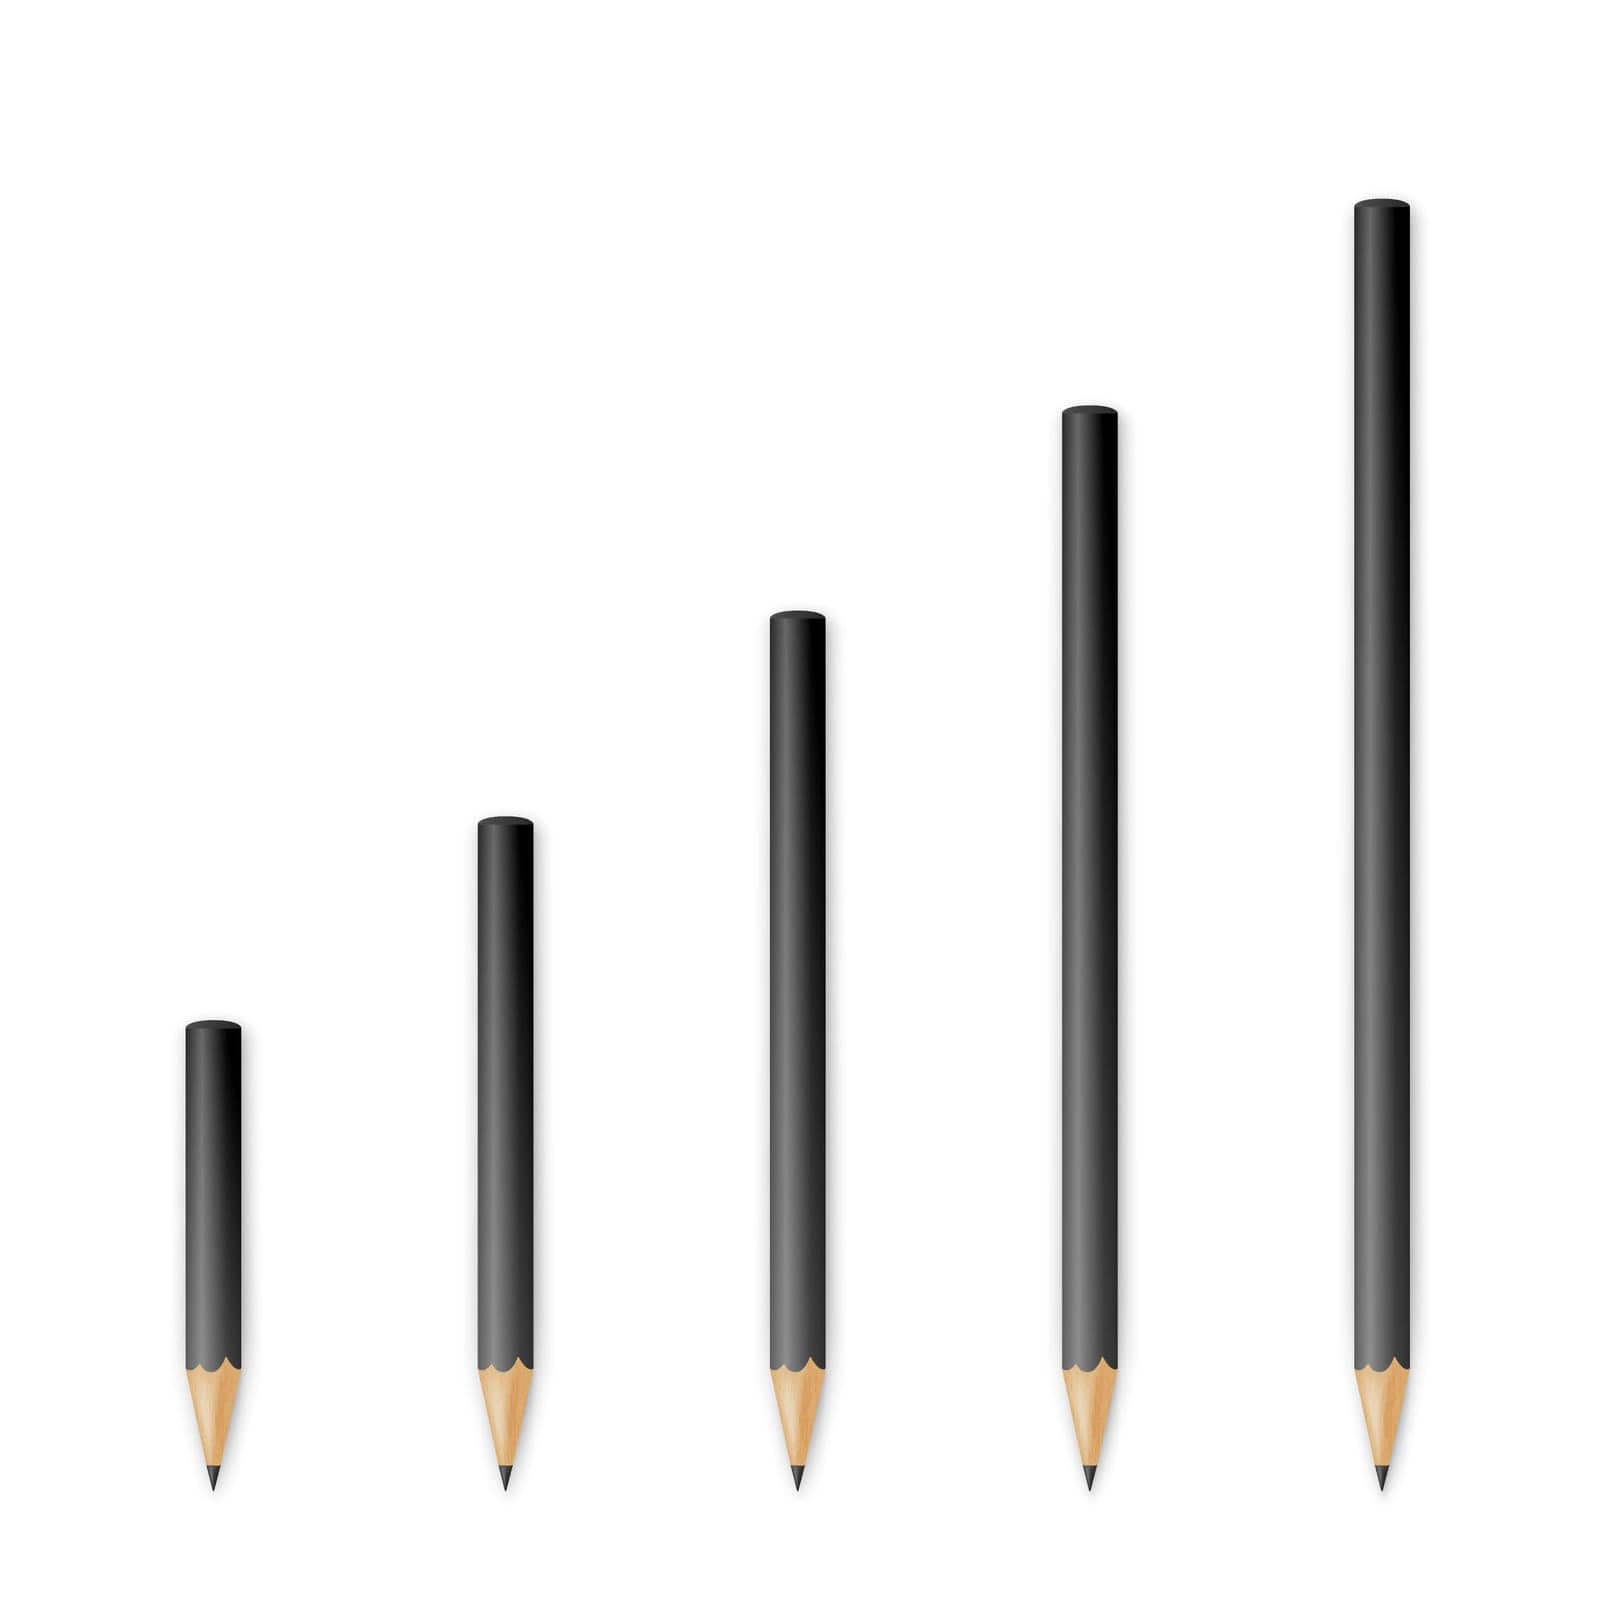 Black wooden sharp pencils by Gomolach